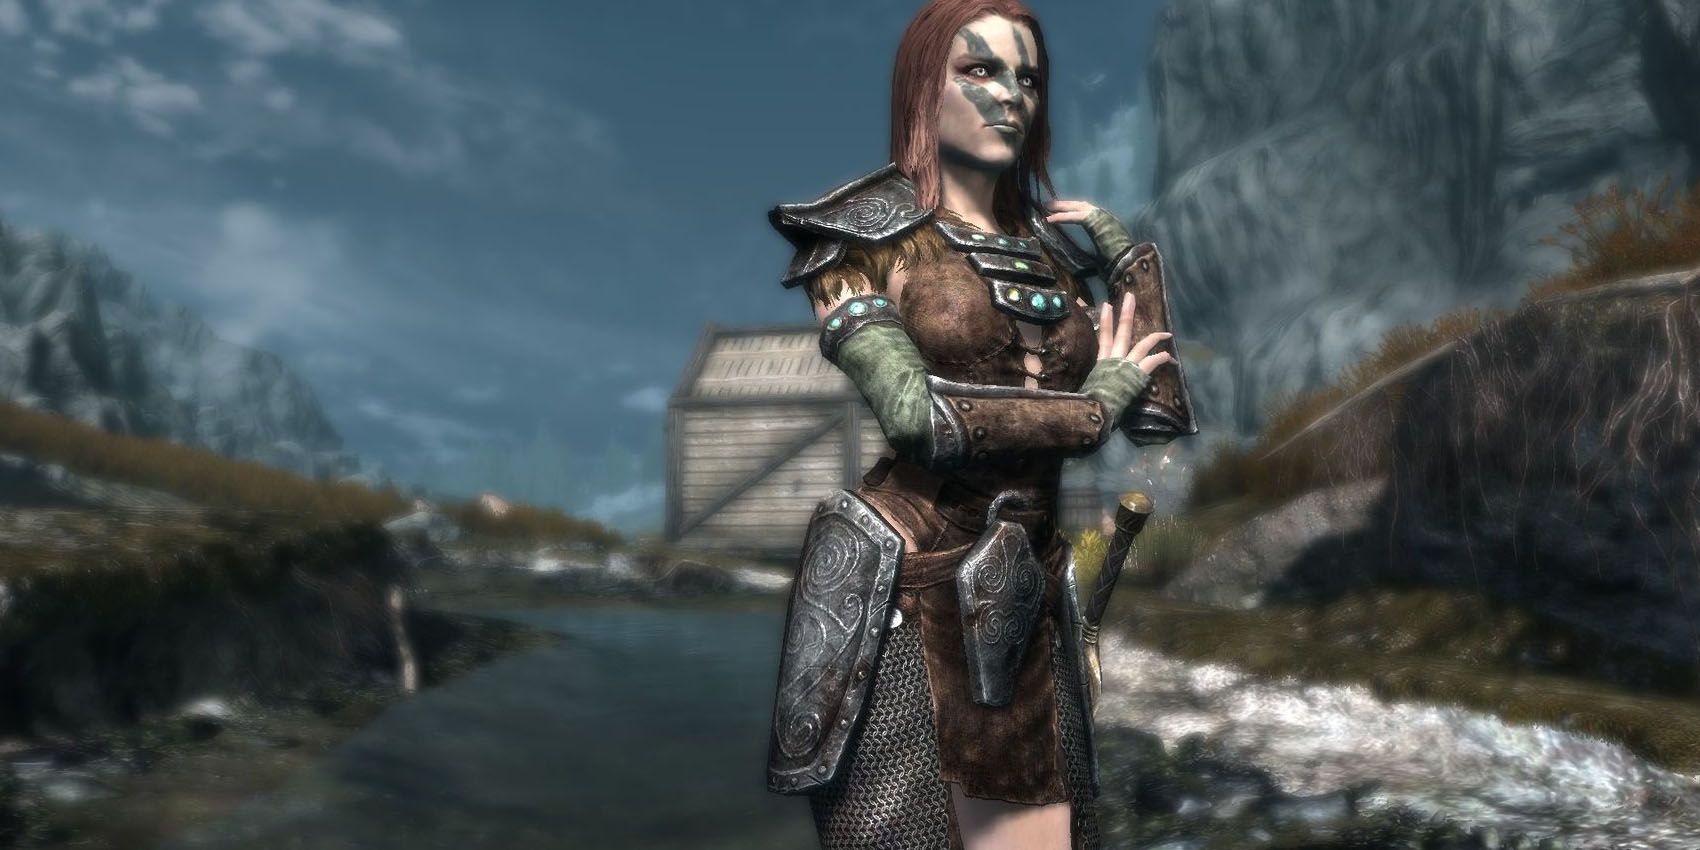 Aela the Huntress stands in a river in Skyrim.